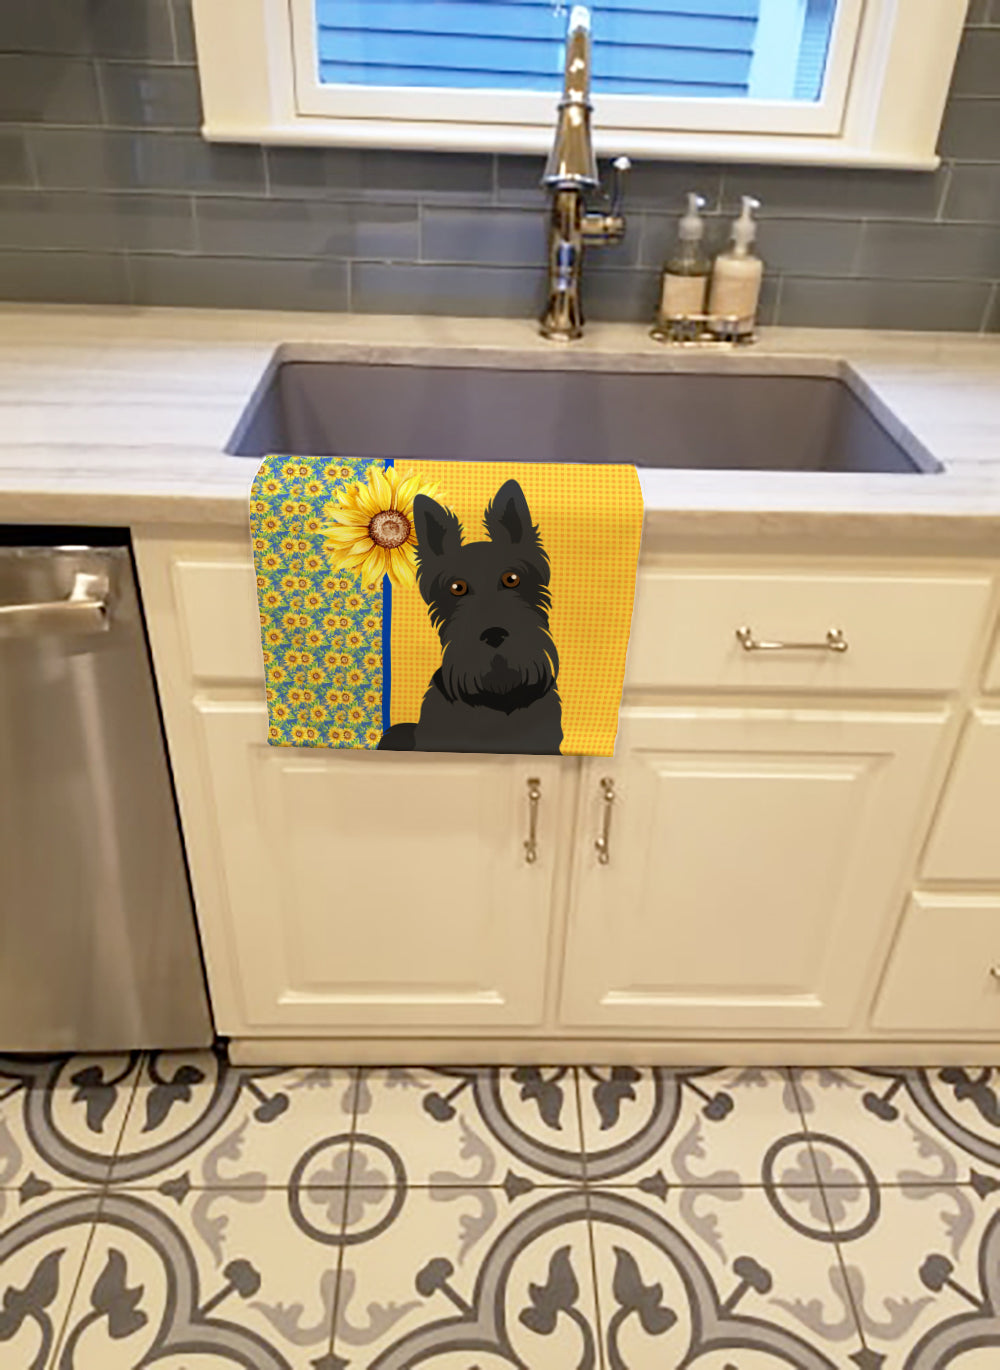 Buy this Summer Sunflowers Black Scottish Terrier Kitchen Towel